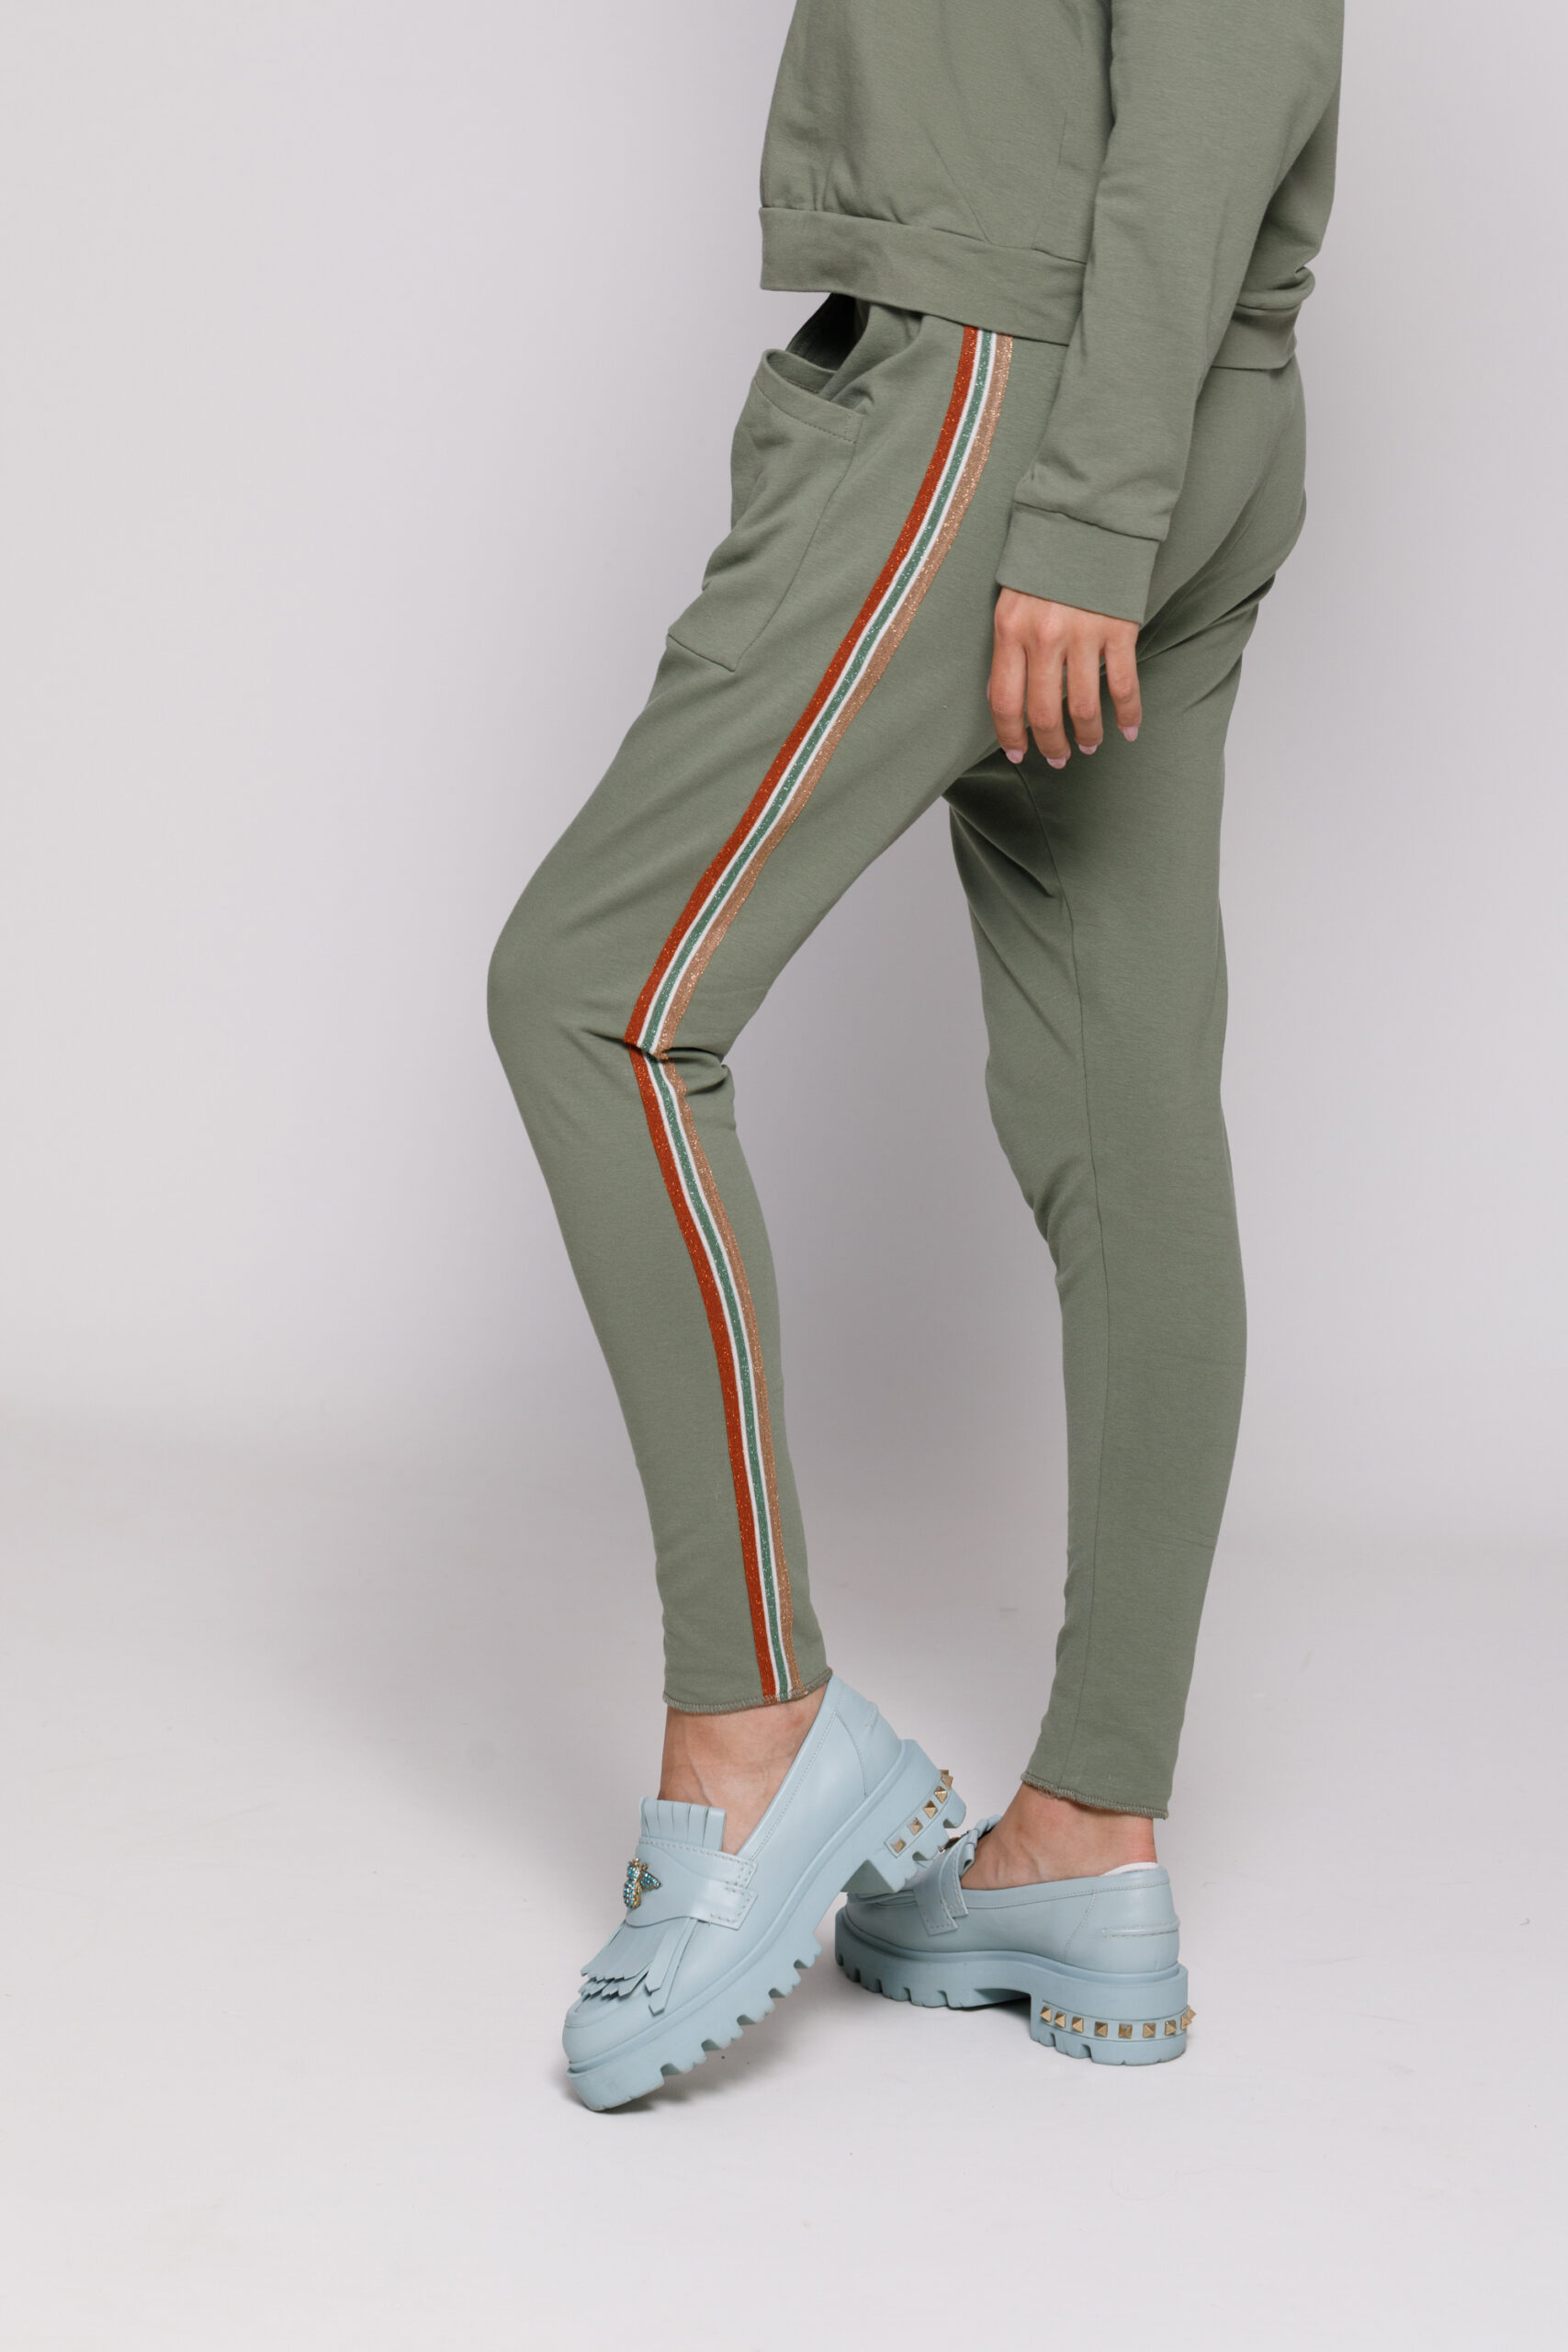 Pantalon TAO kaki casual din felpa. Materiale naturale, design unicat, cu broderie si aplicatii handmade